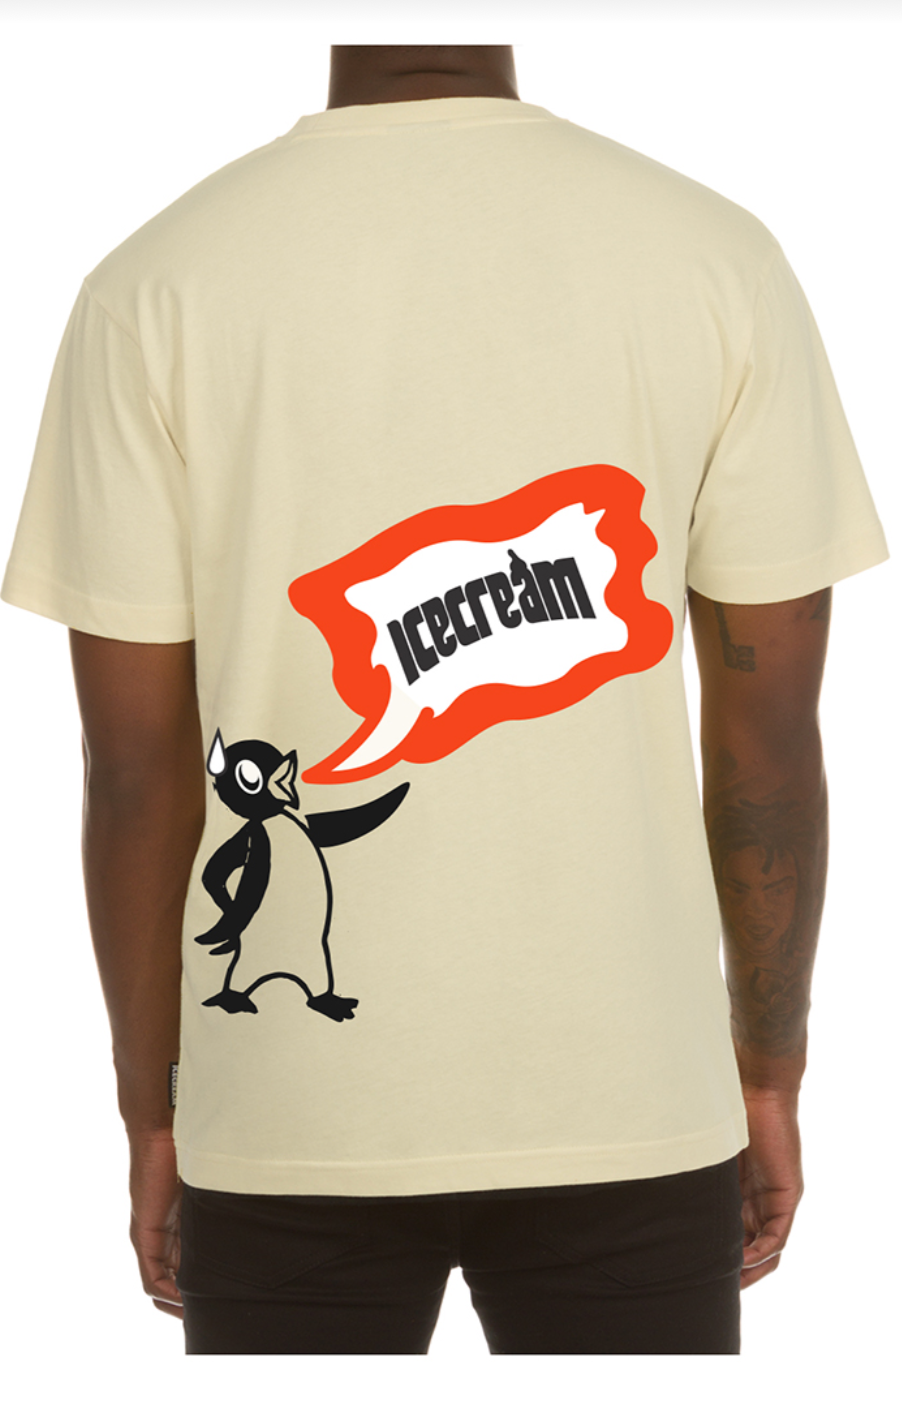 BBC Icecream T-Shirt